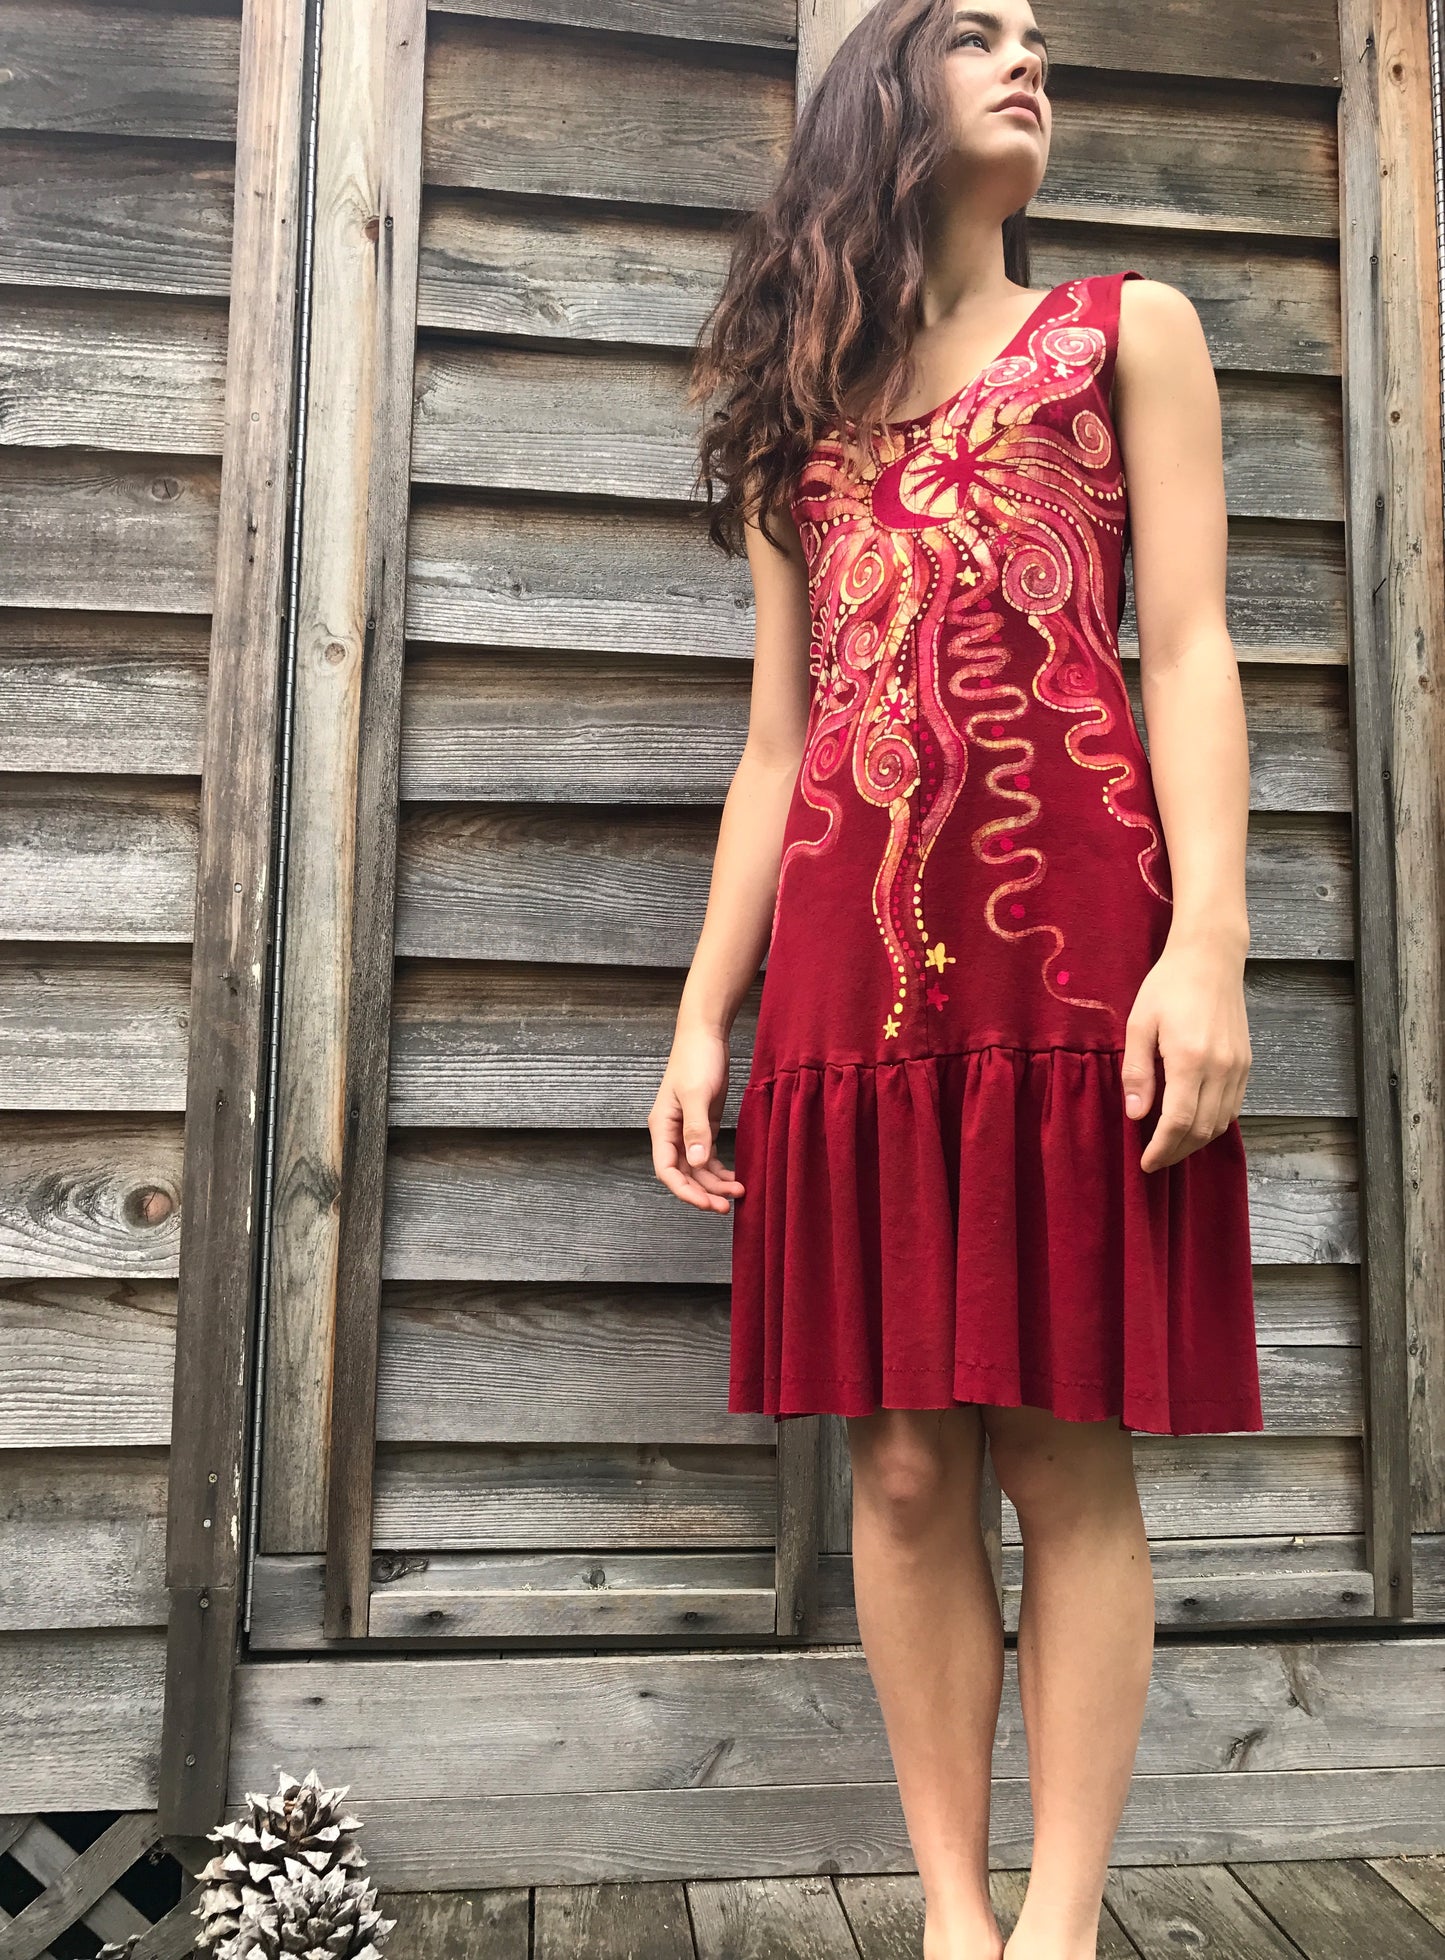 Fire Dancer Red Batikwalla Dress in Organic Cotton - Size Small